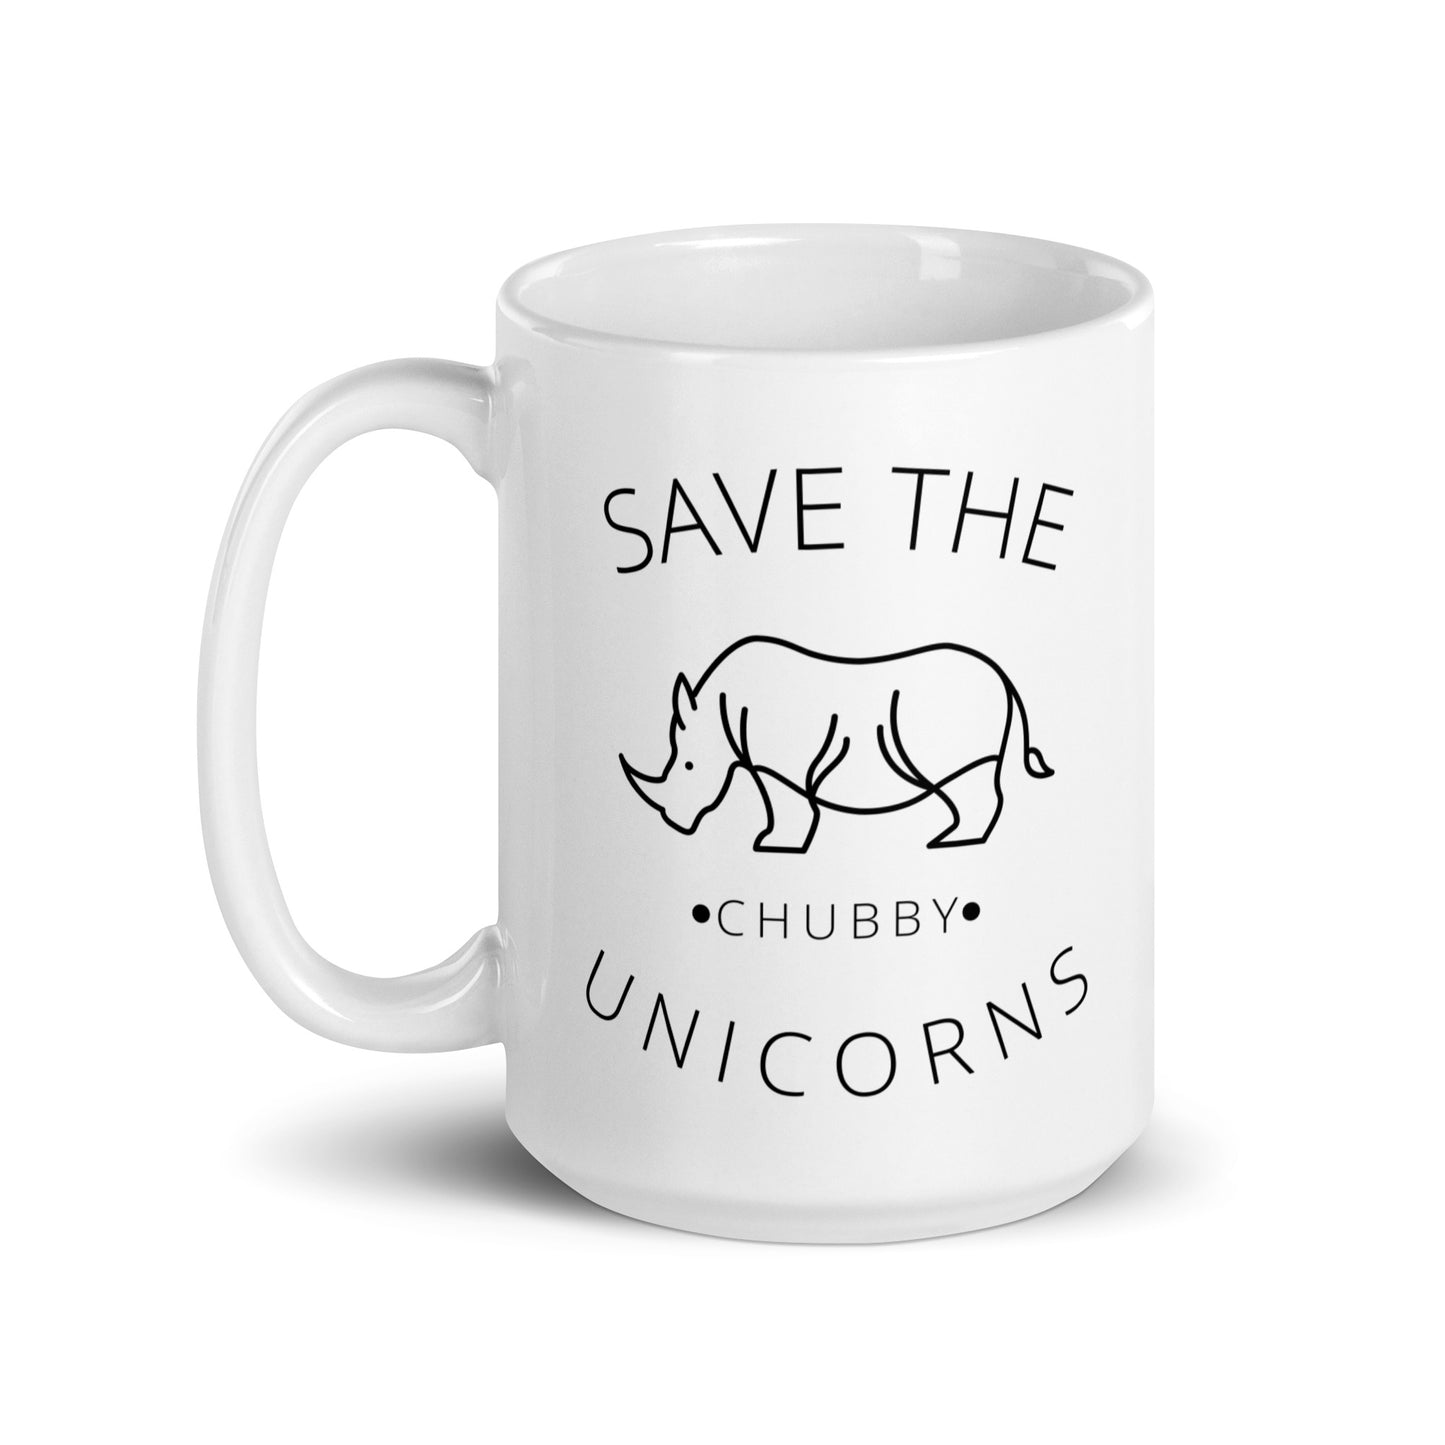 Save the chubby... - White glossy mug